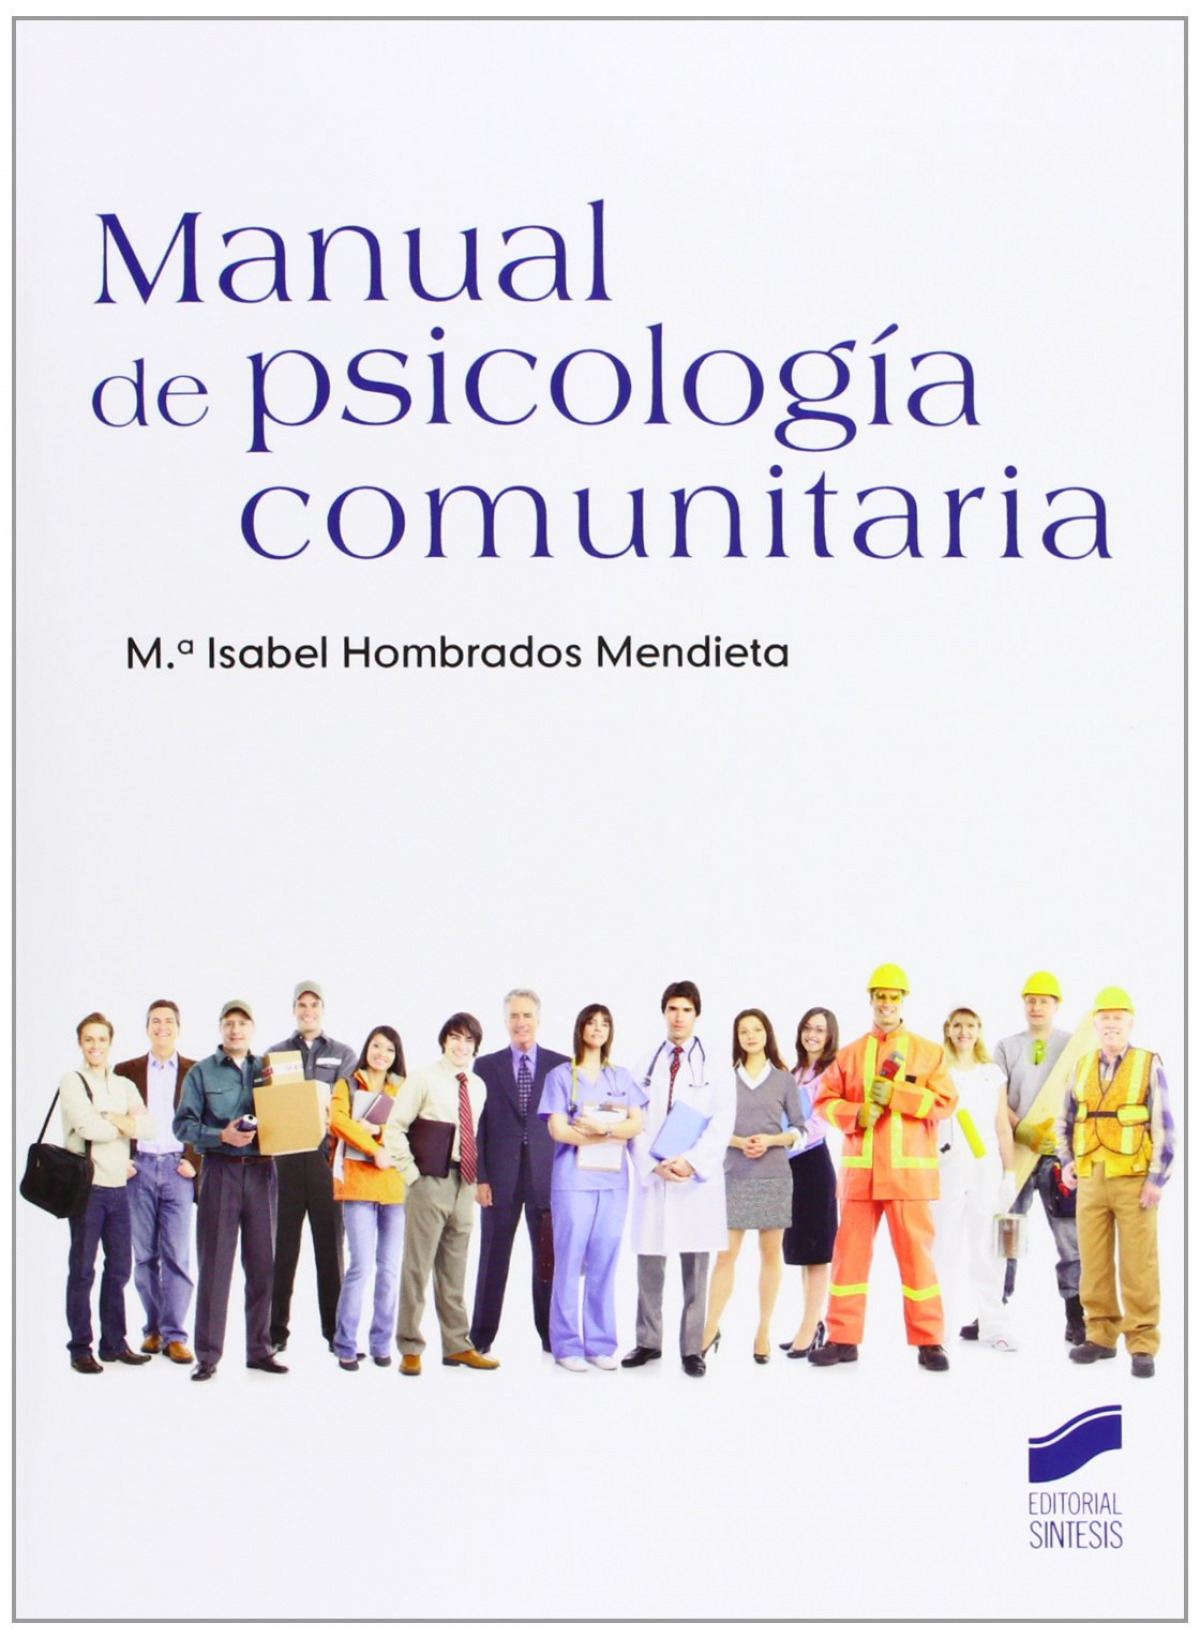 Manual de psicologia comunitaria - Vv.Aa.